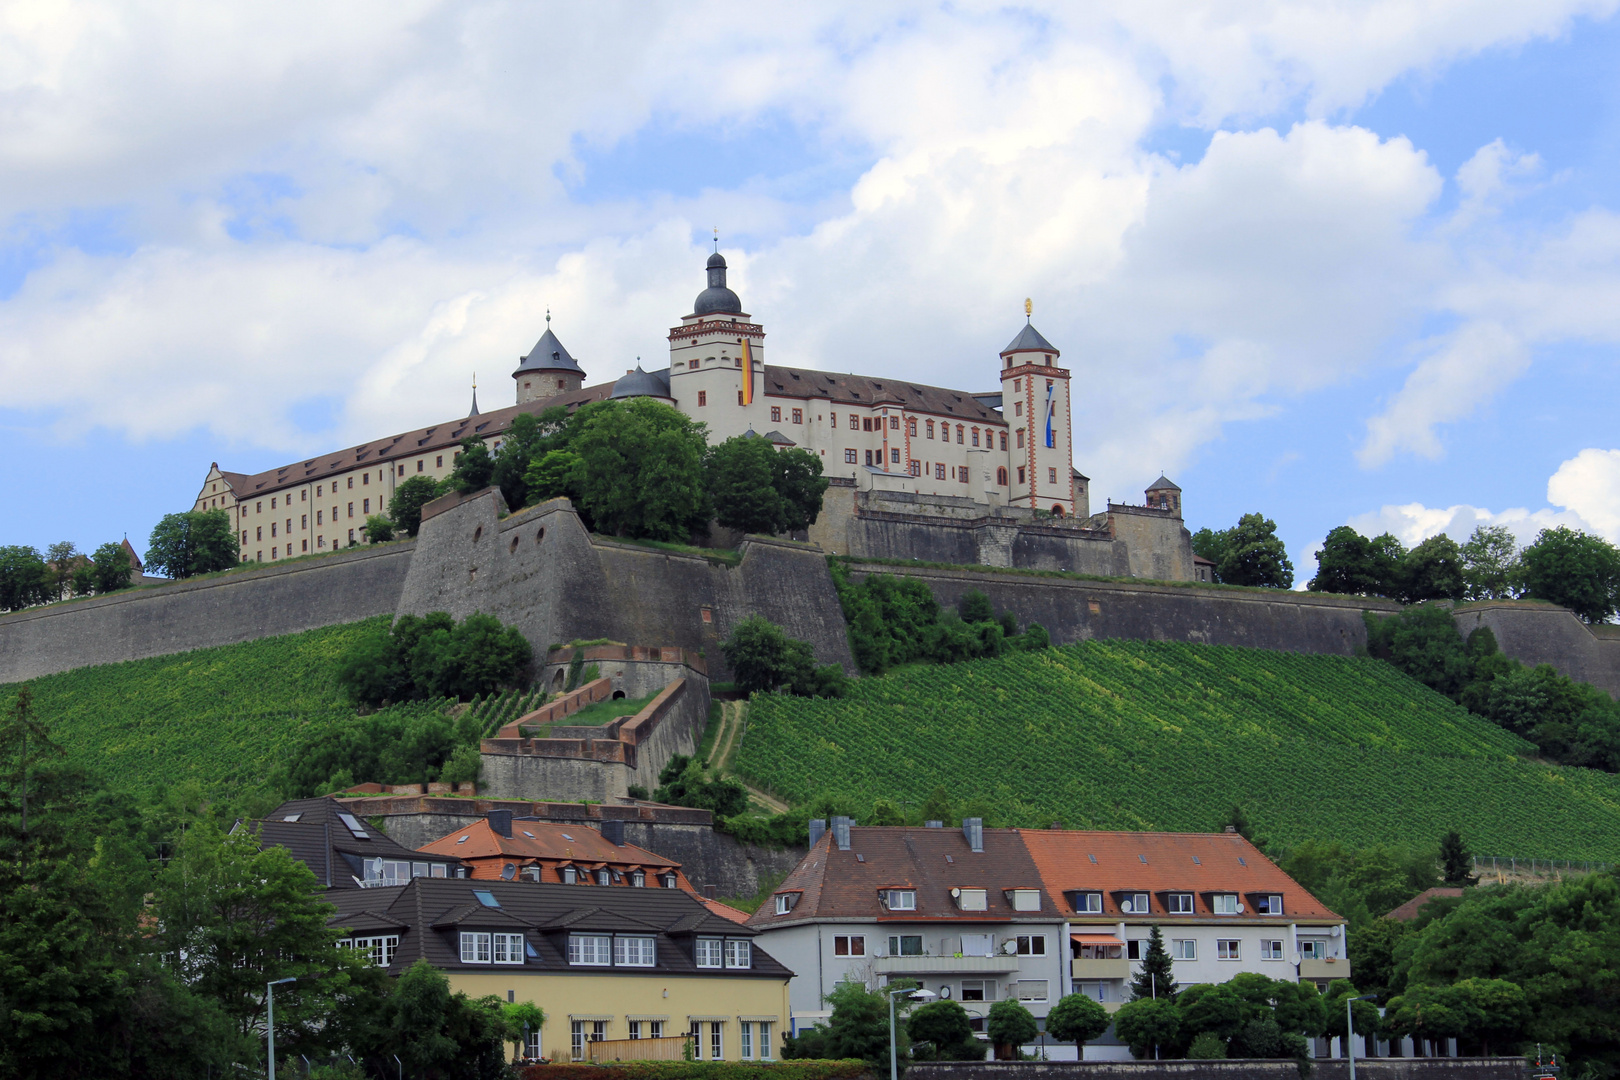 Würzburg Festung Marienberg